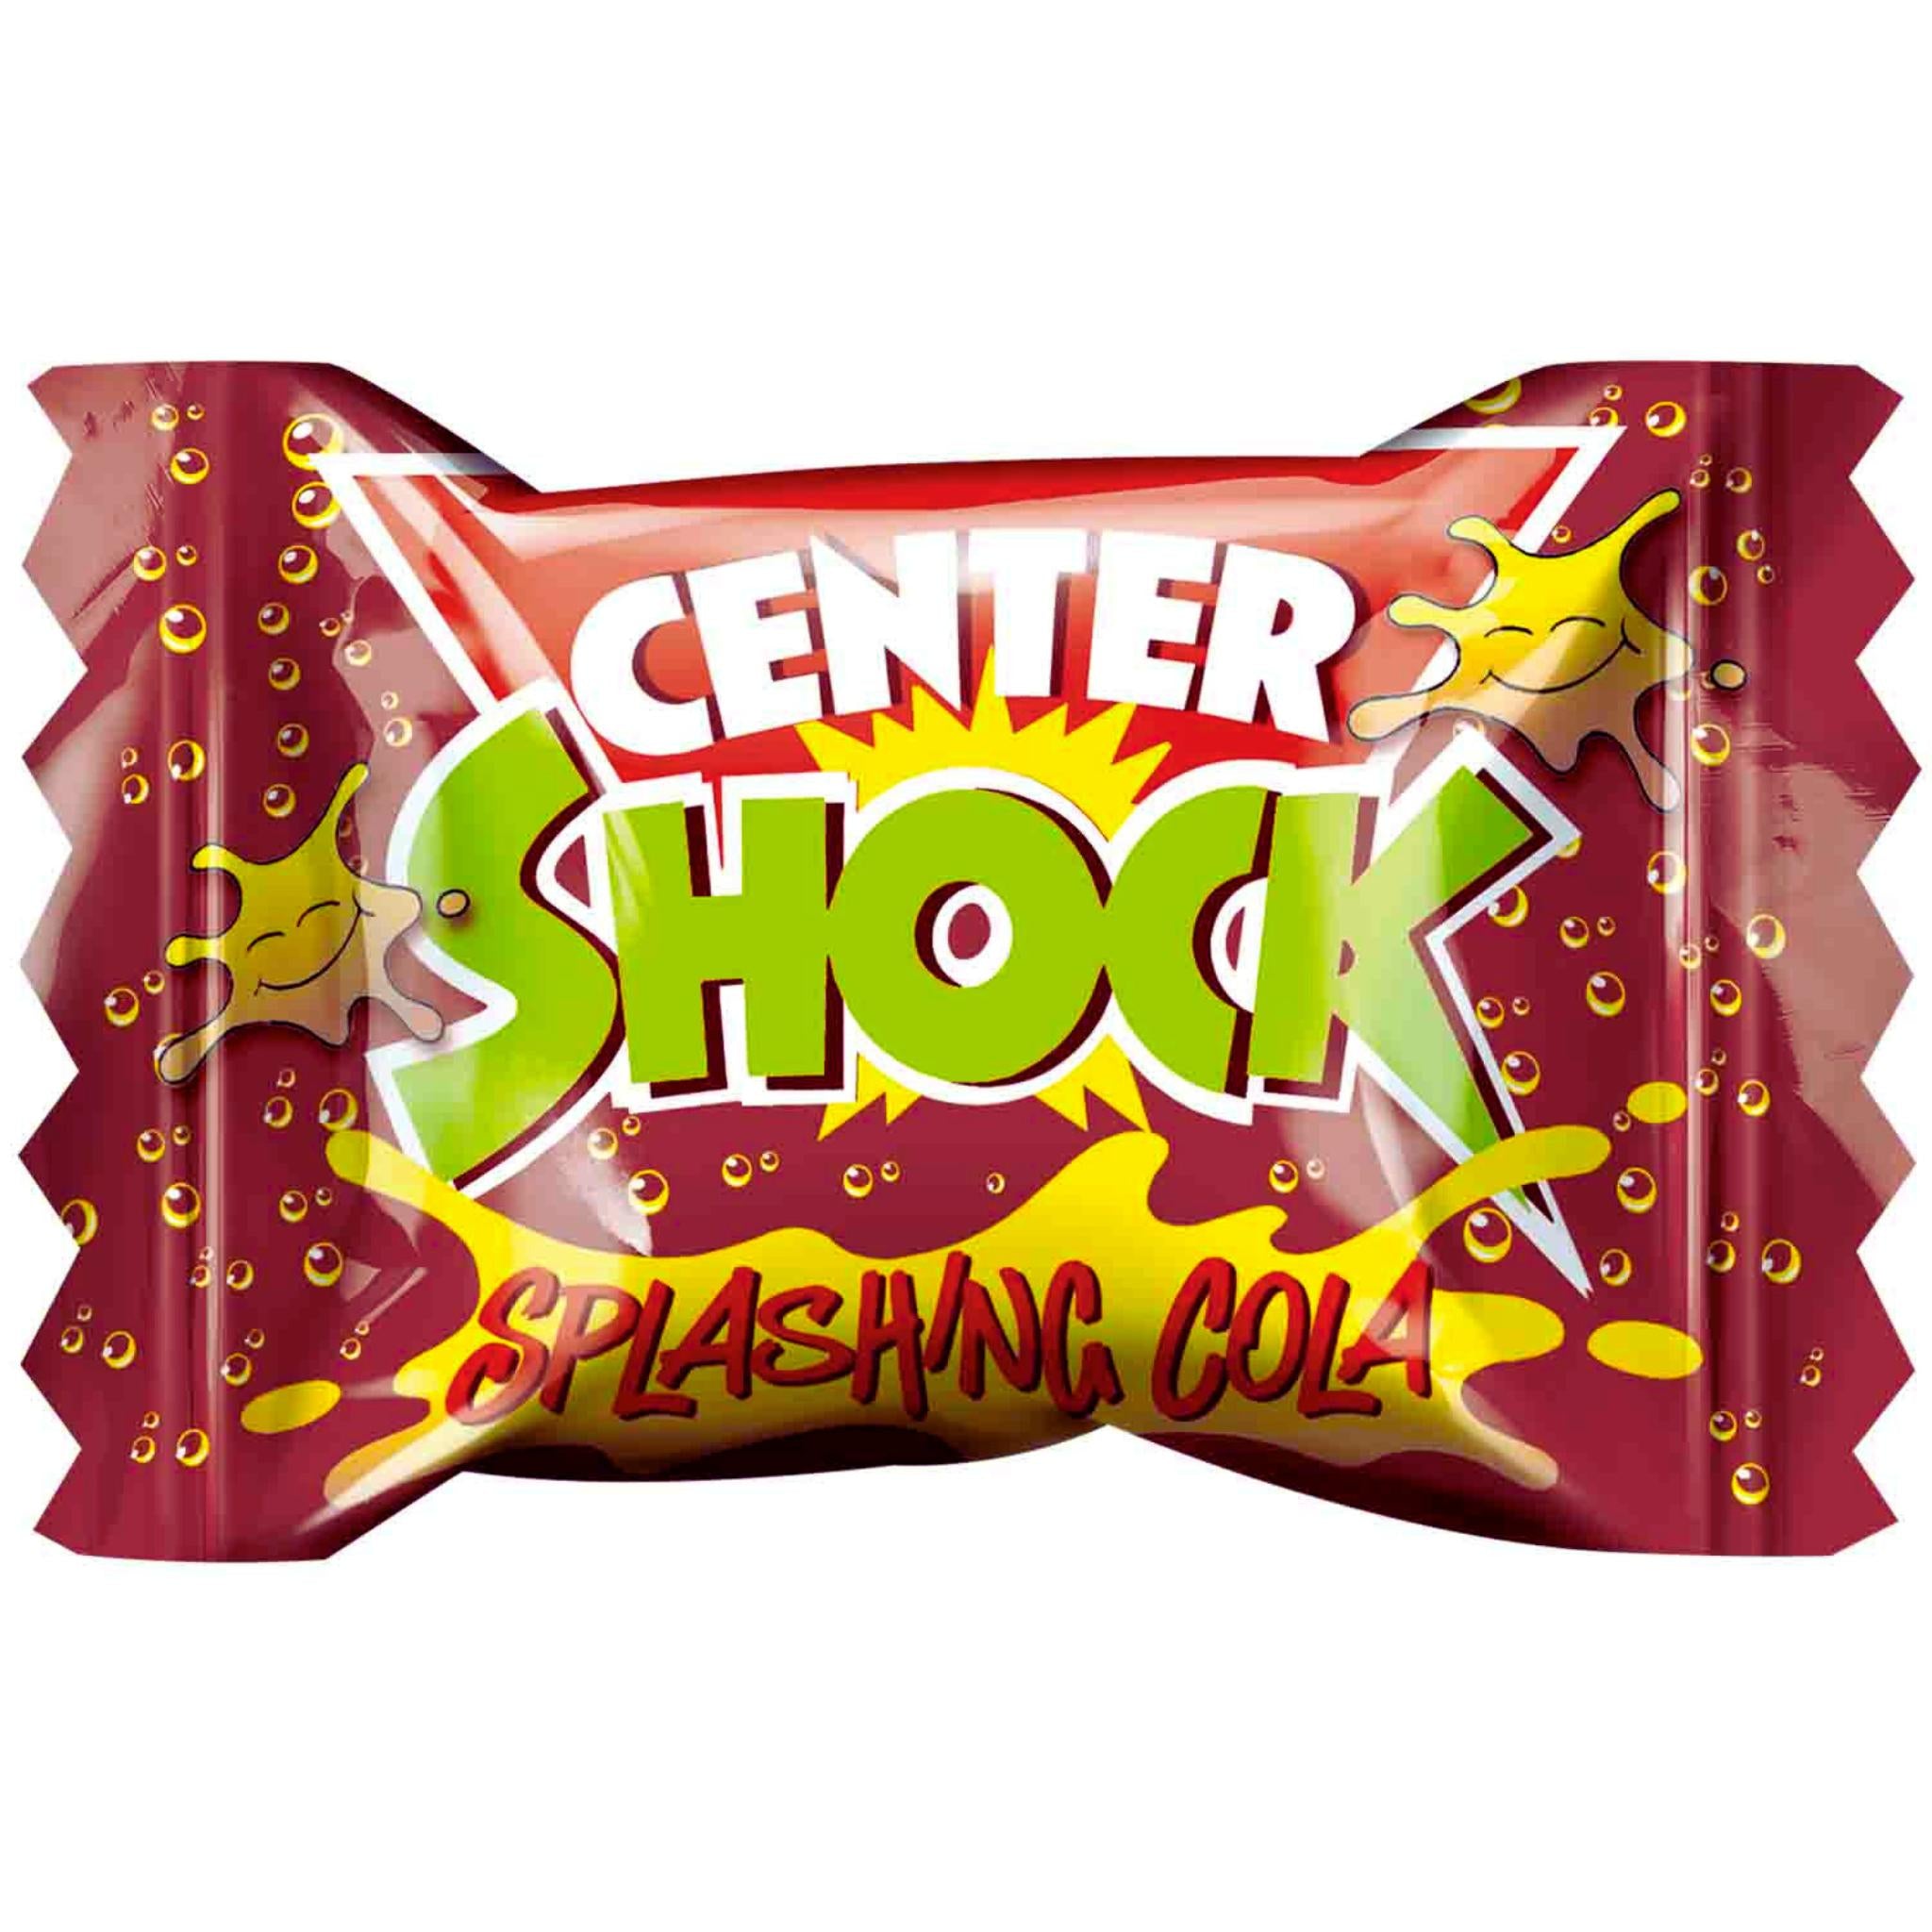 Center Shock Splashing Cola - 4g